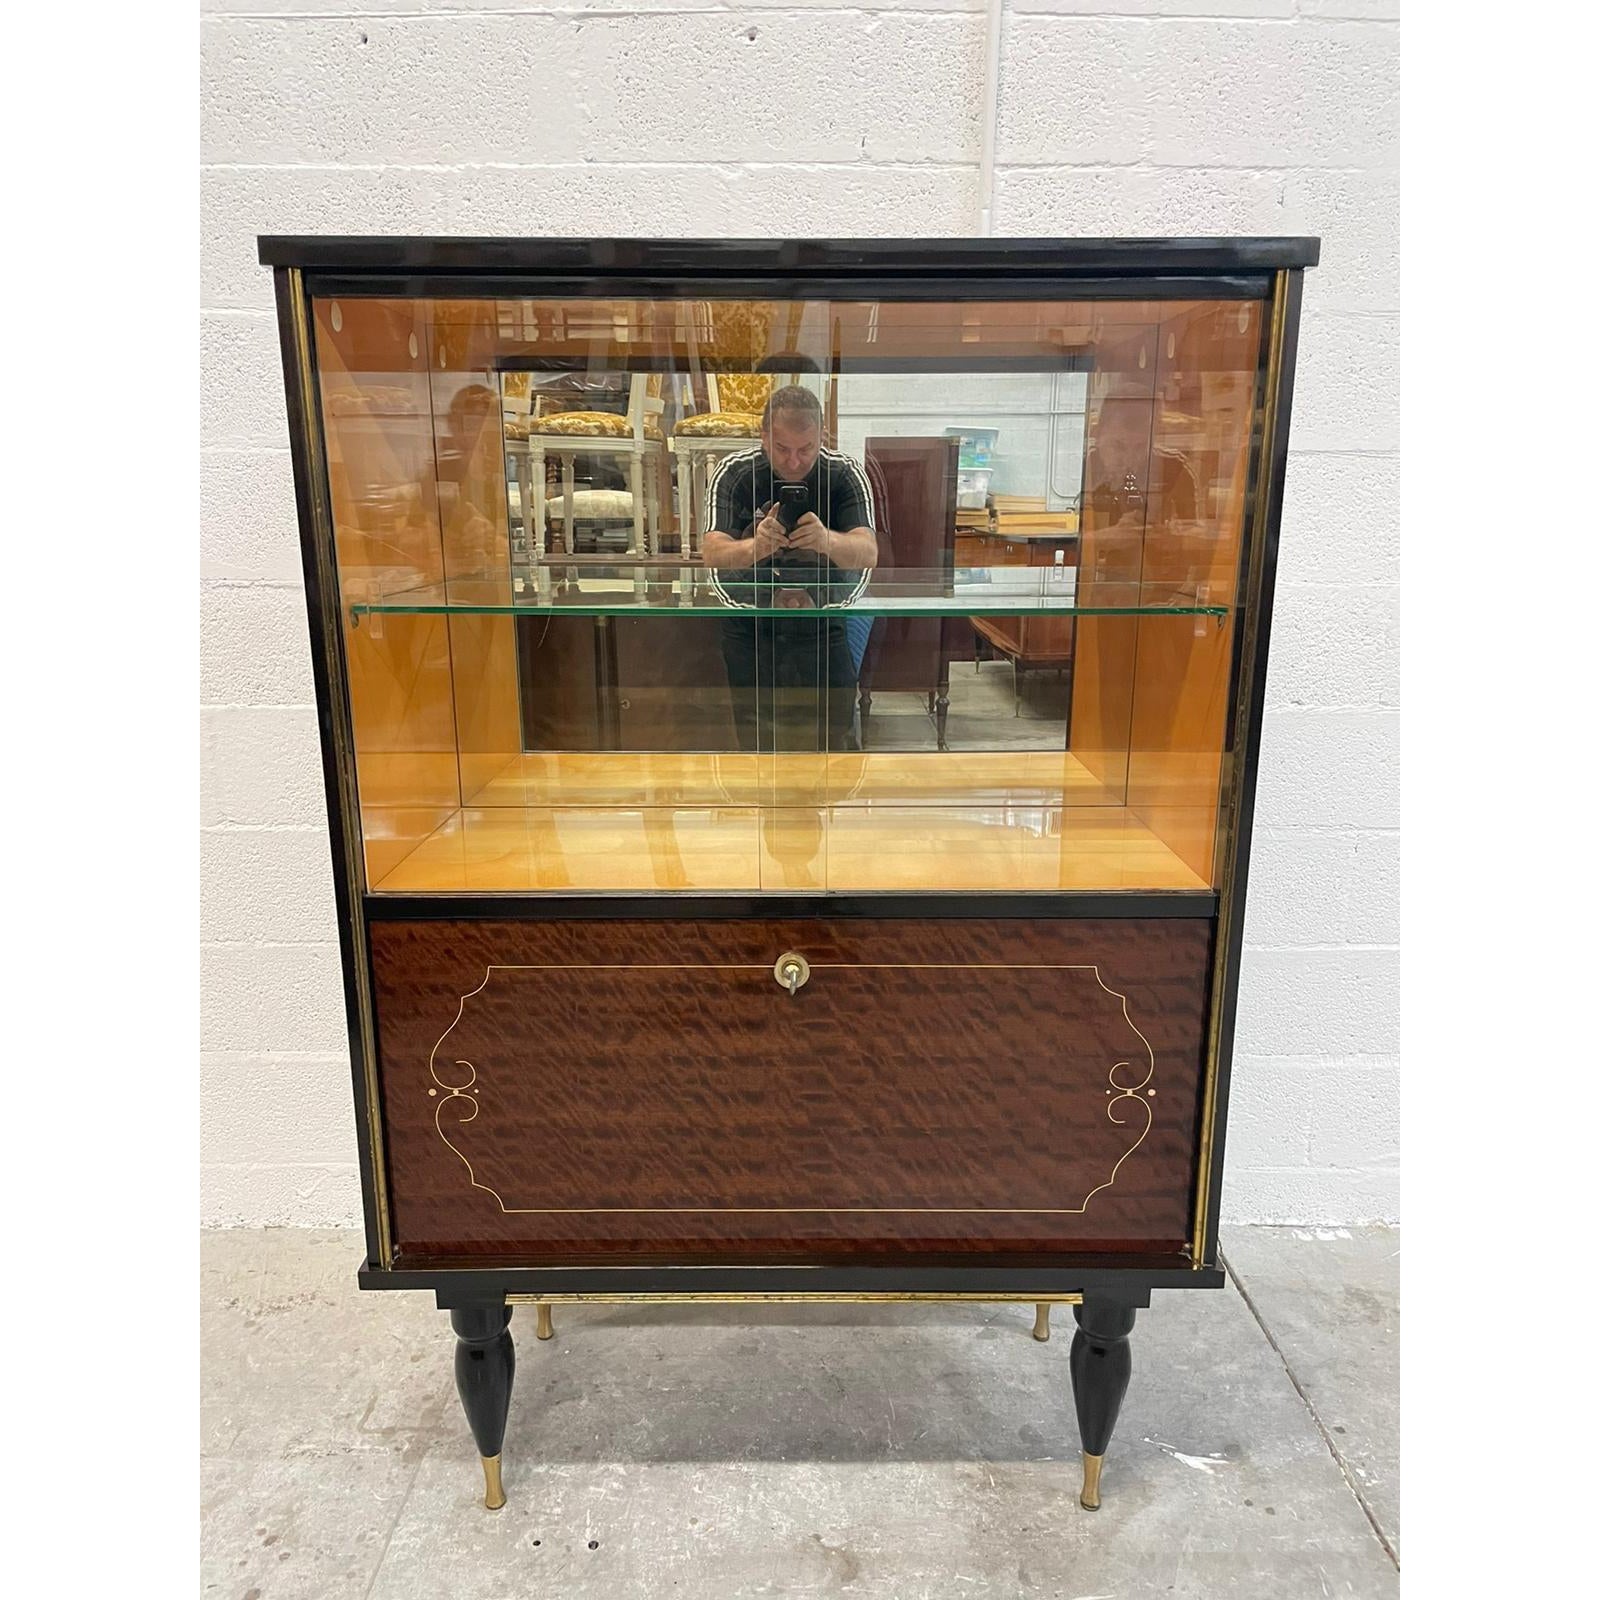 https://frenchartdecofurniture.com/wp-content/uploads/2021/06/1940s-classic-french-art-deco-flame-mahogany-dry-bars-cabinet-or-vitrine-4263.jpg